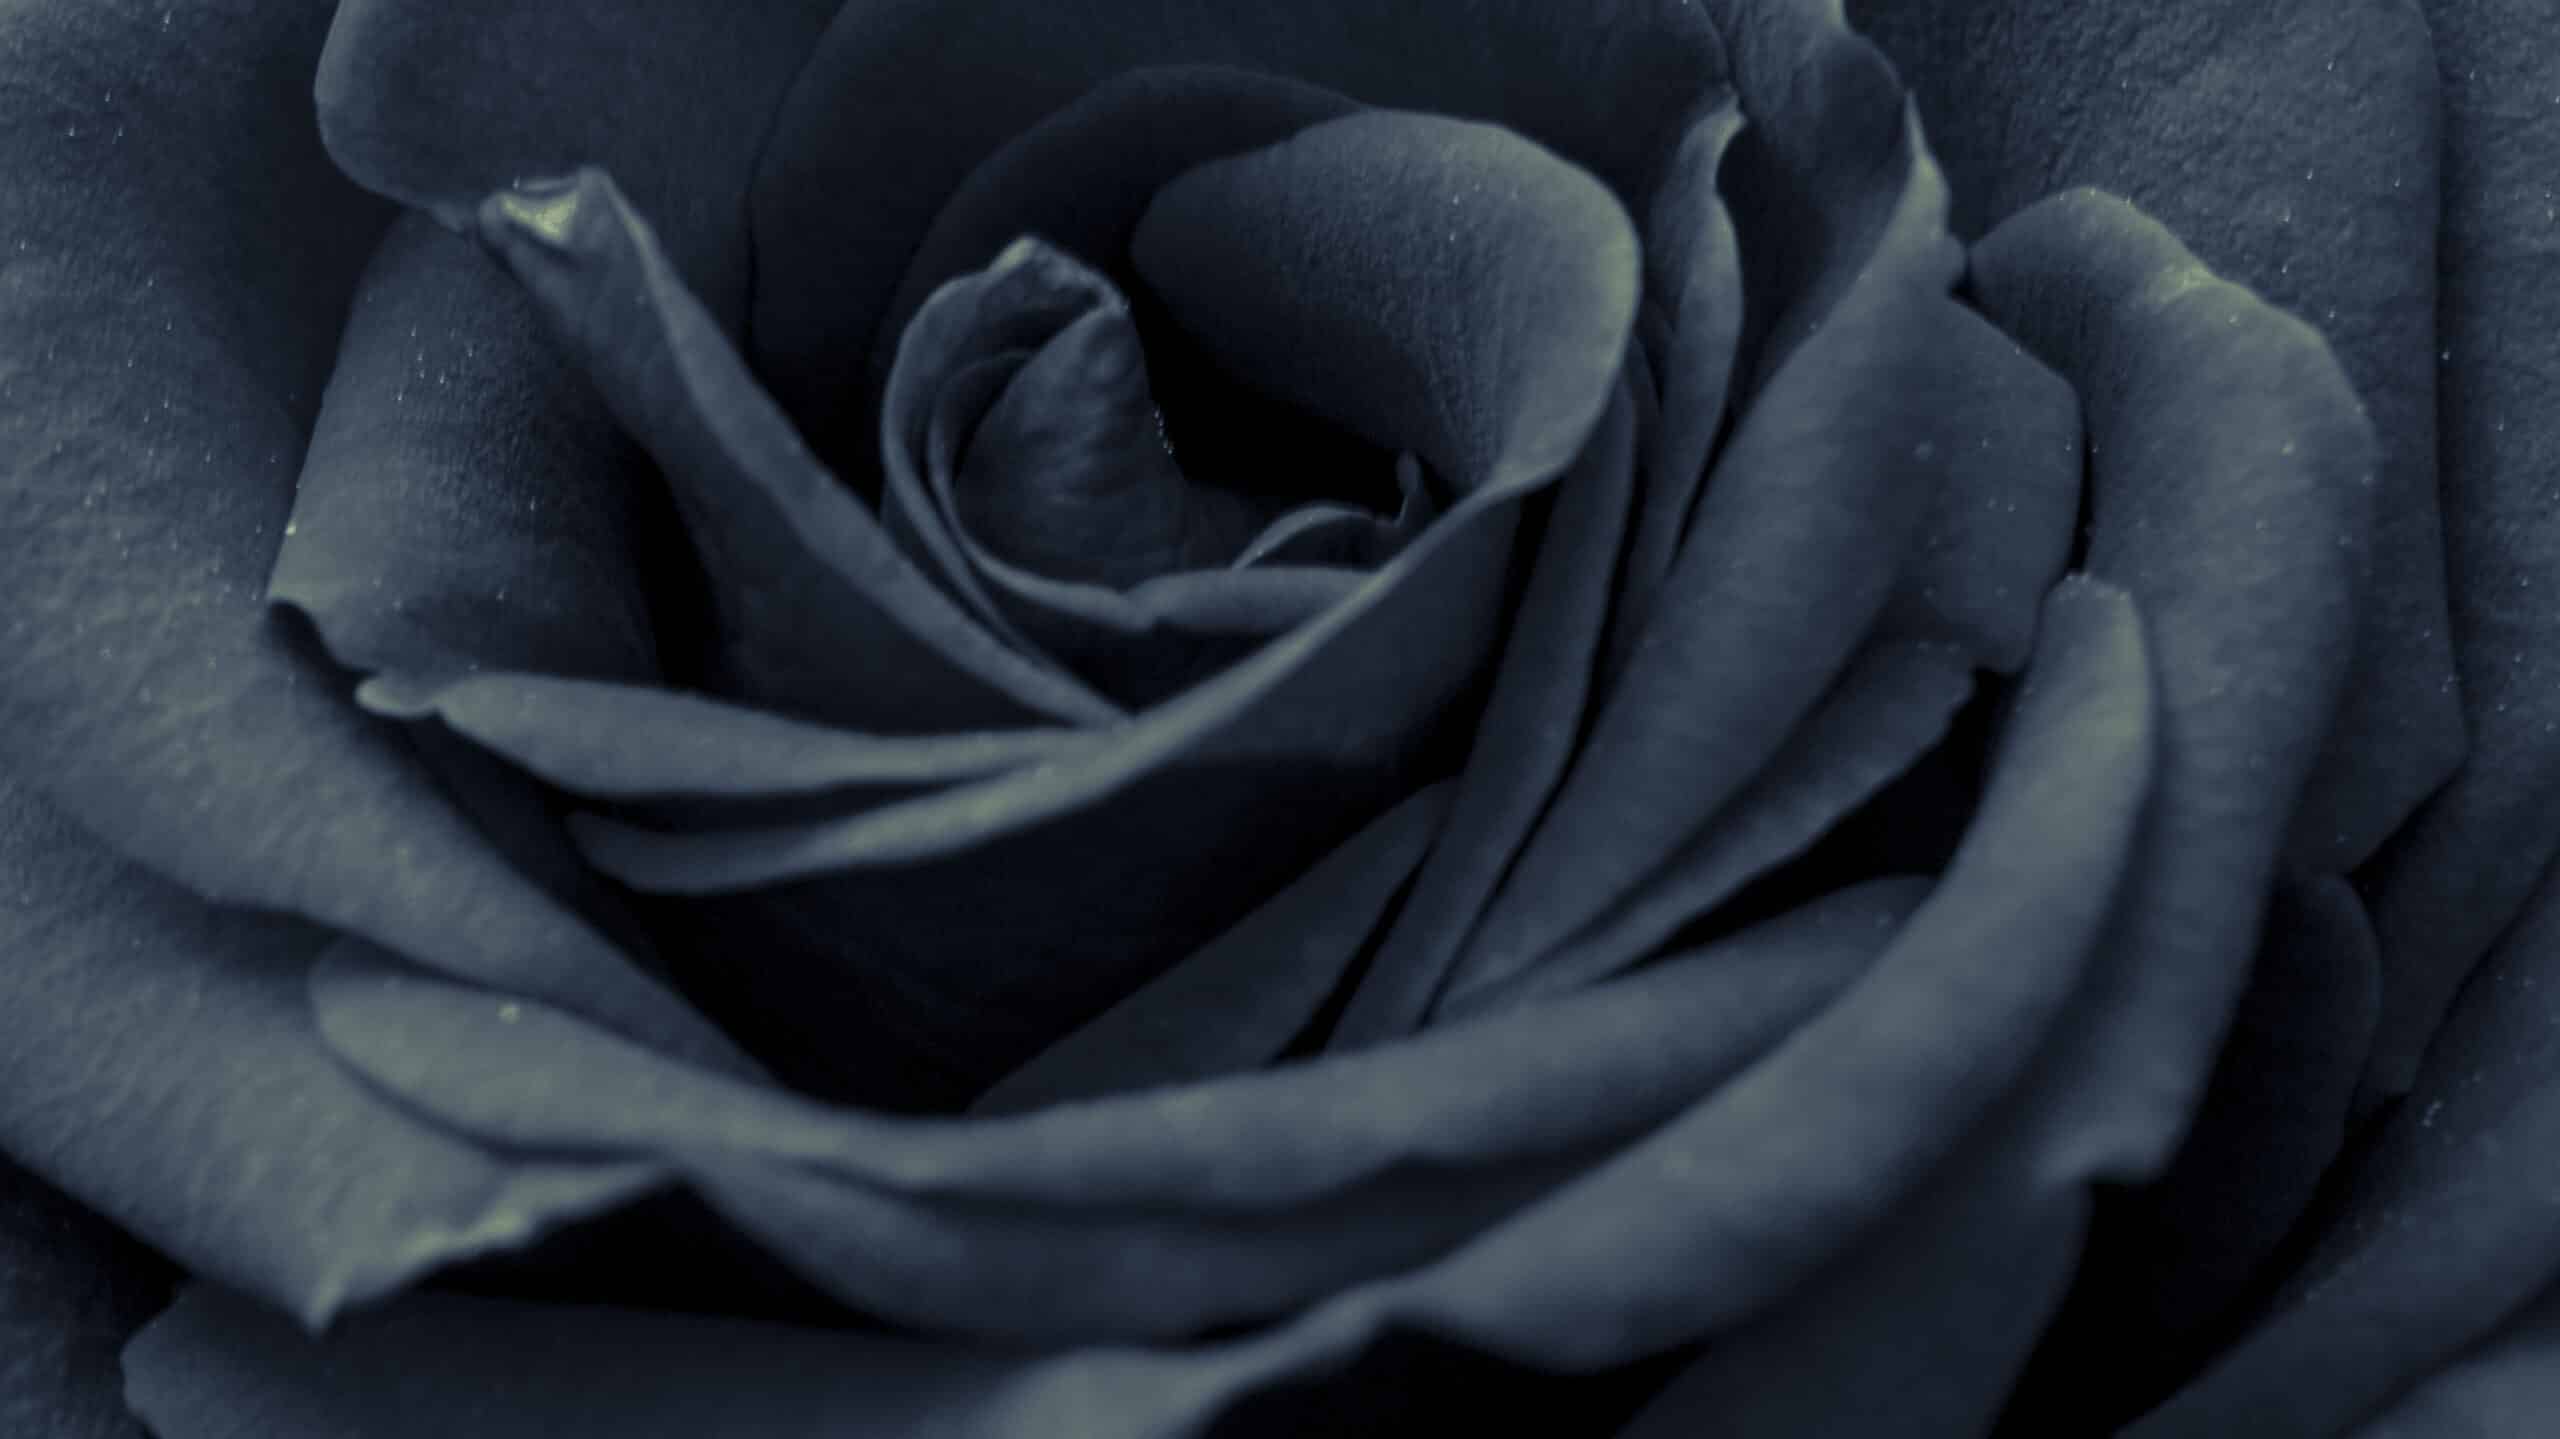 A closeup of a black rose